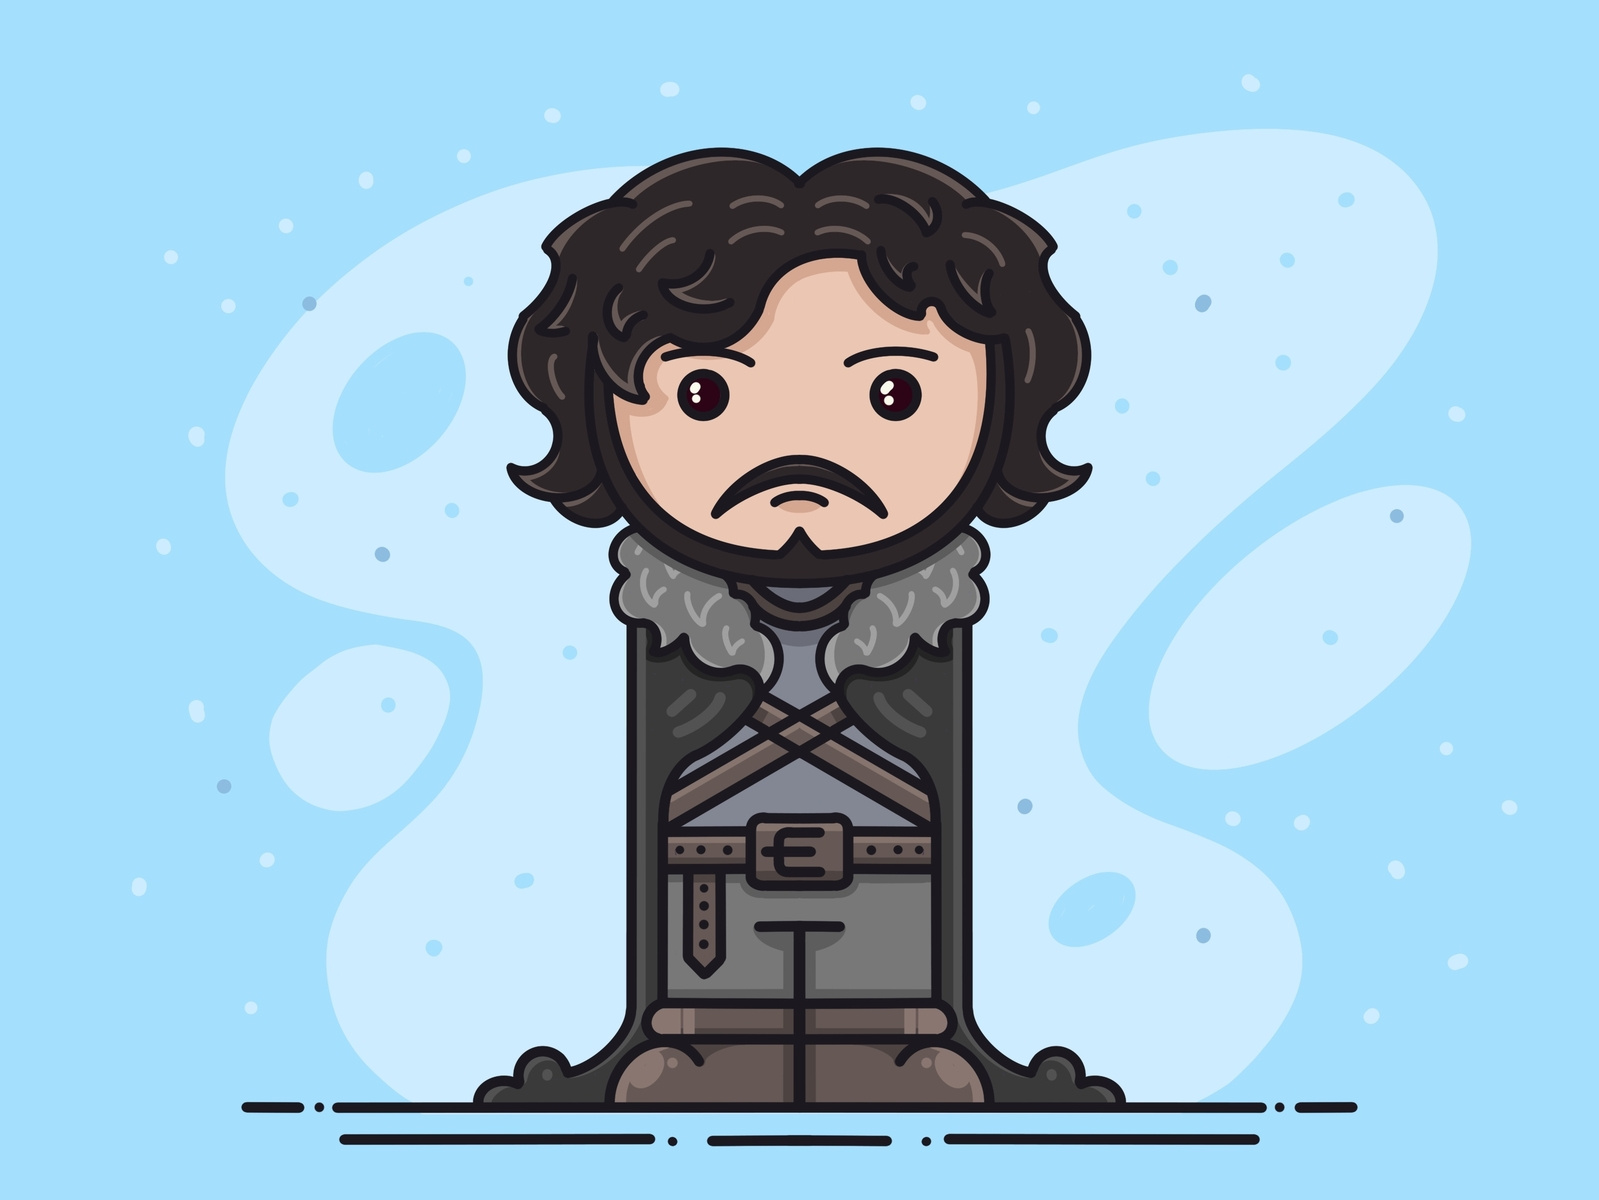 Jon Snow Illustration by Boris Garic🎨 on Dribbble